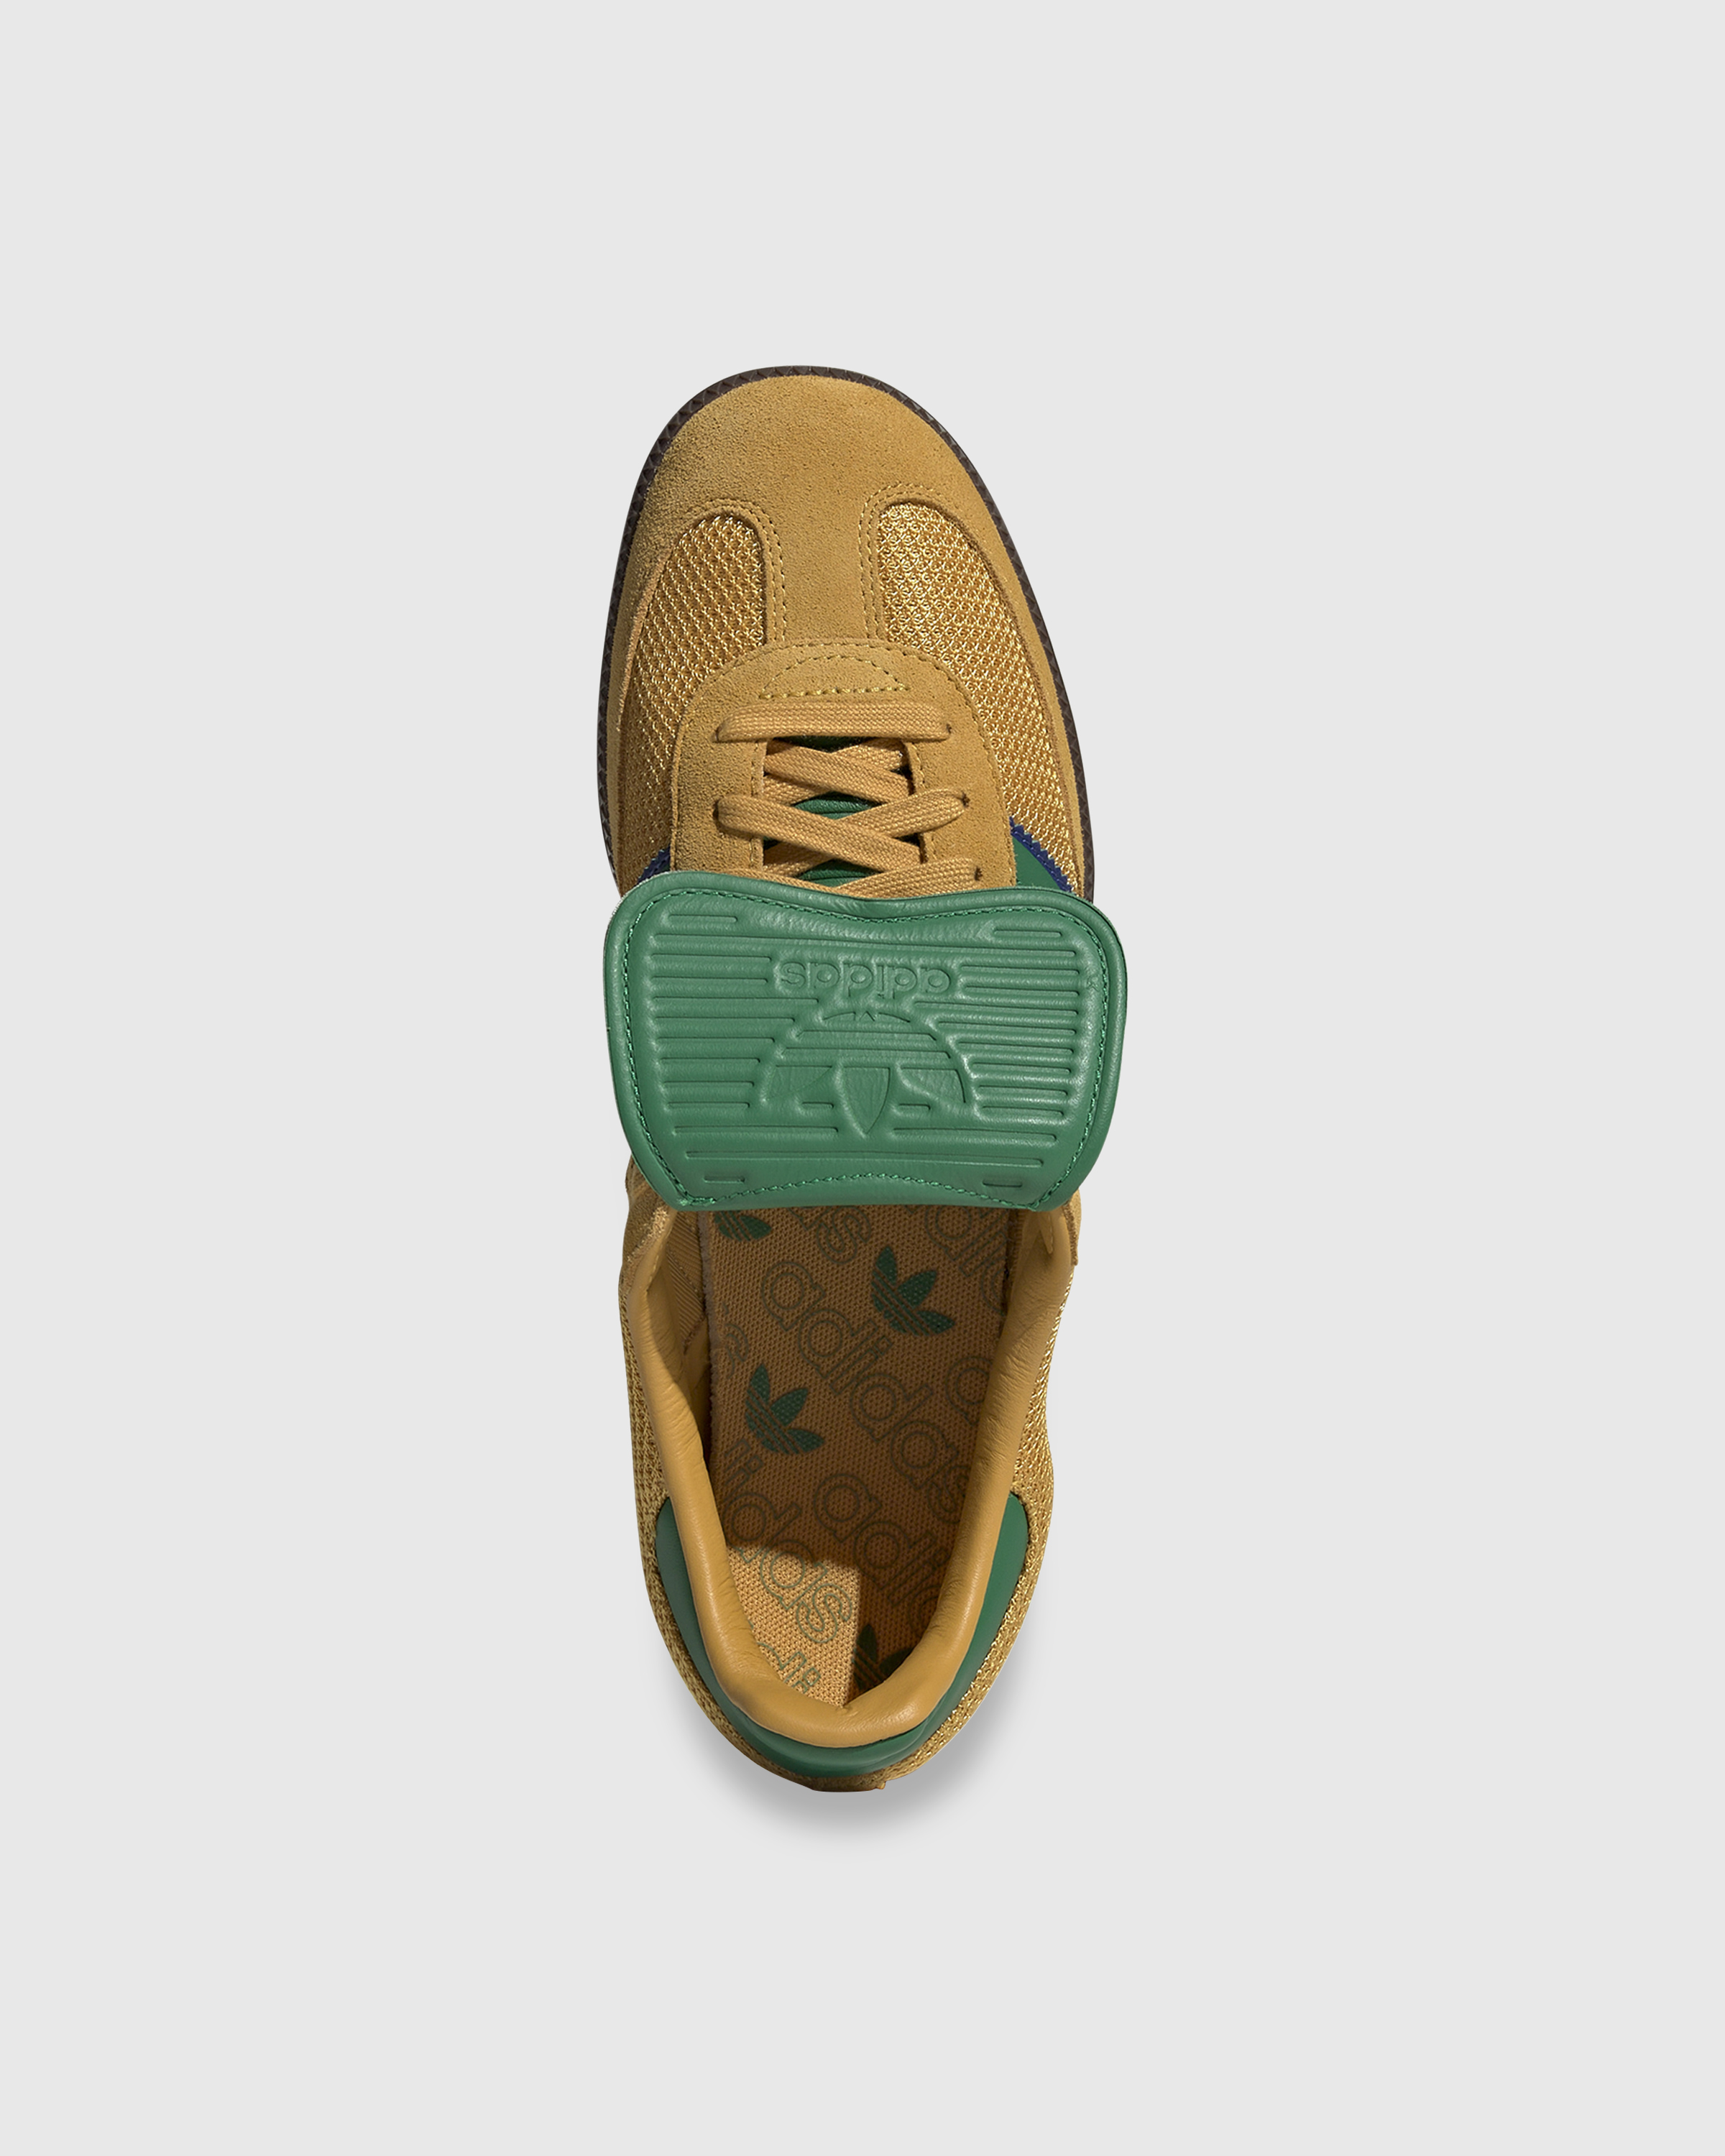 Adidas – Samba LT Preyel/Green/Gum - Low Top Sneakers - Orange - Image 5